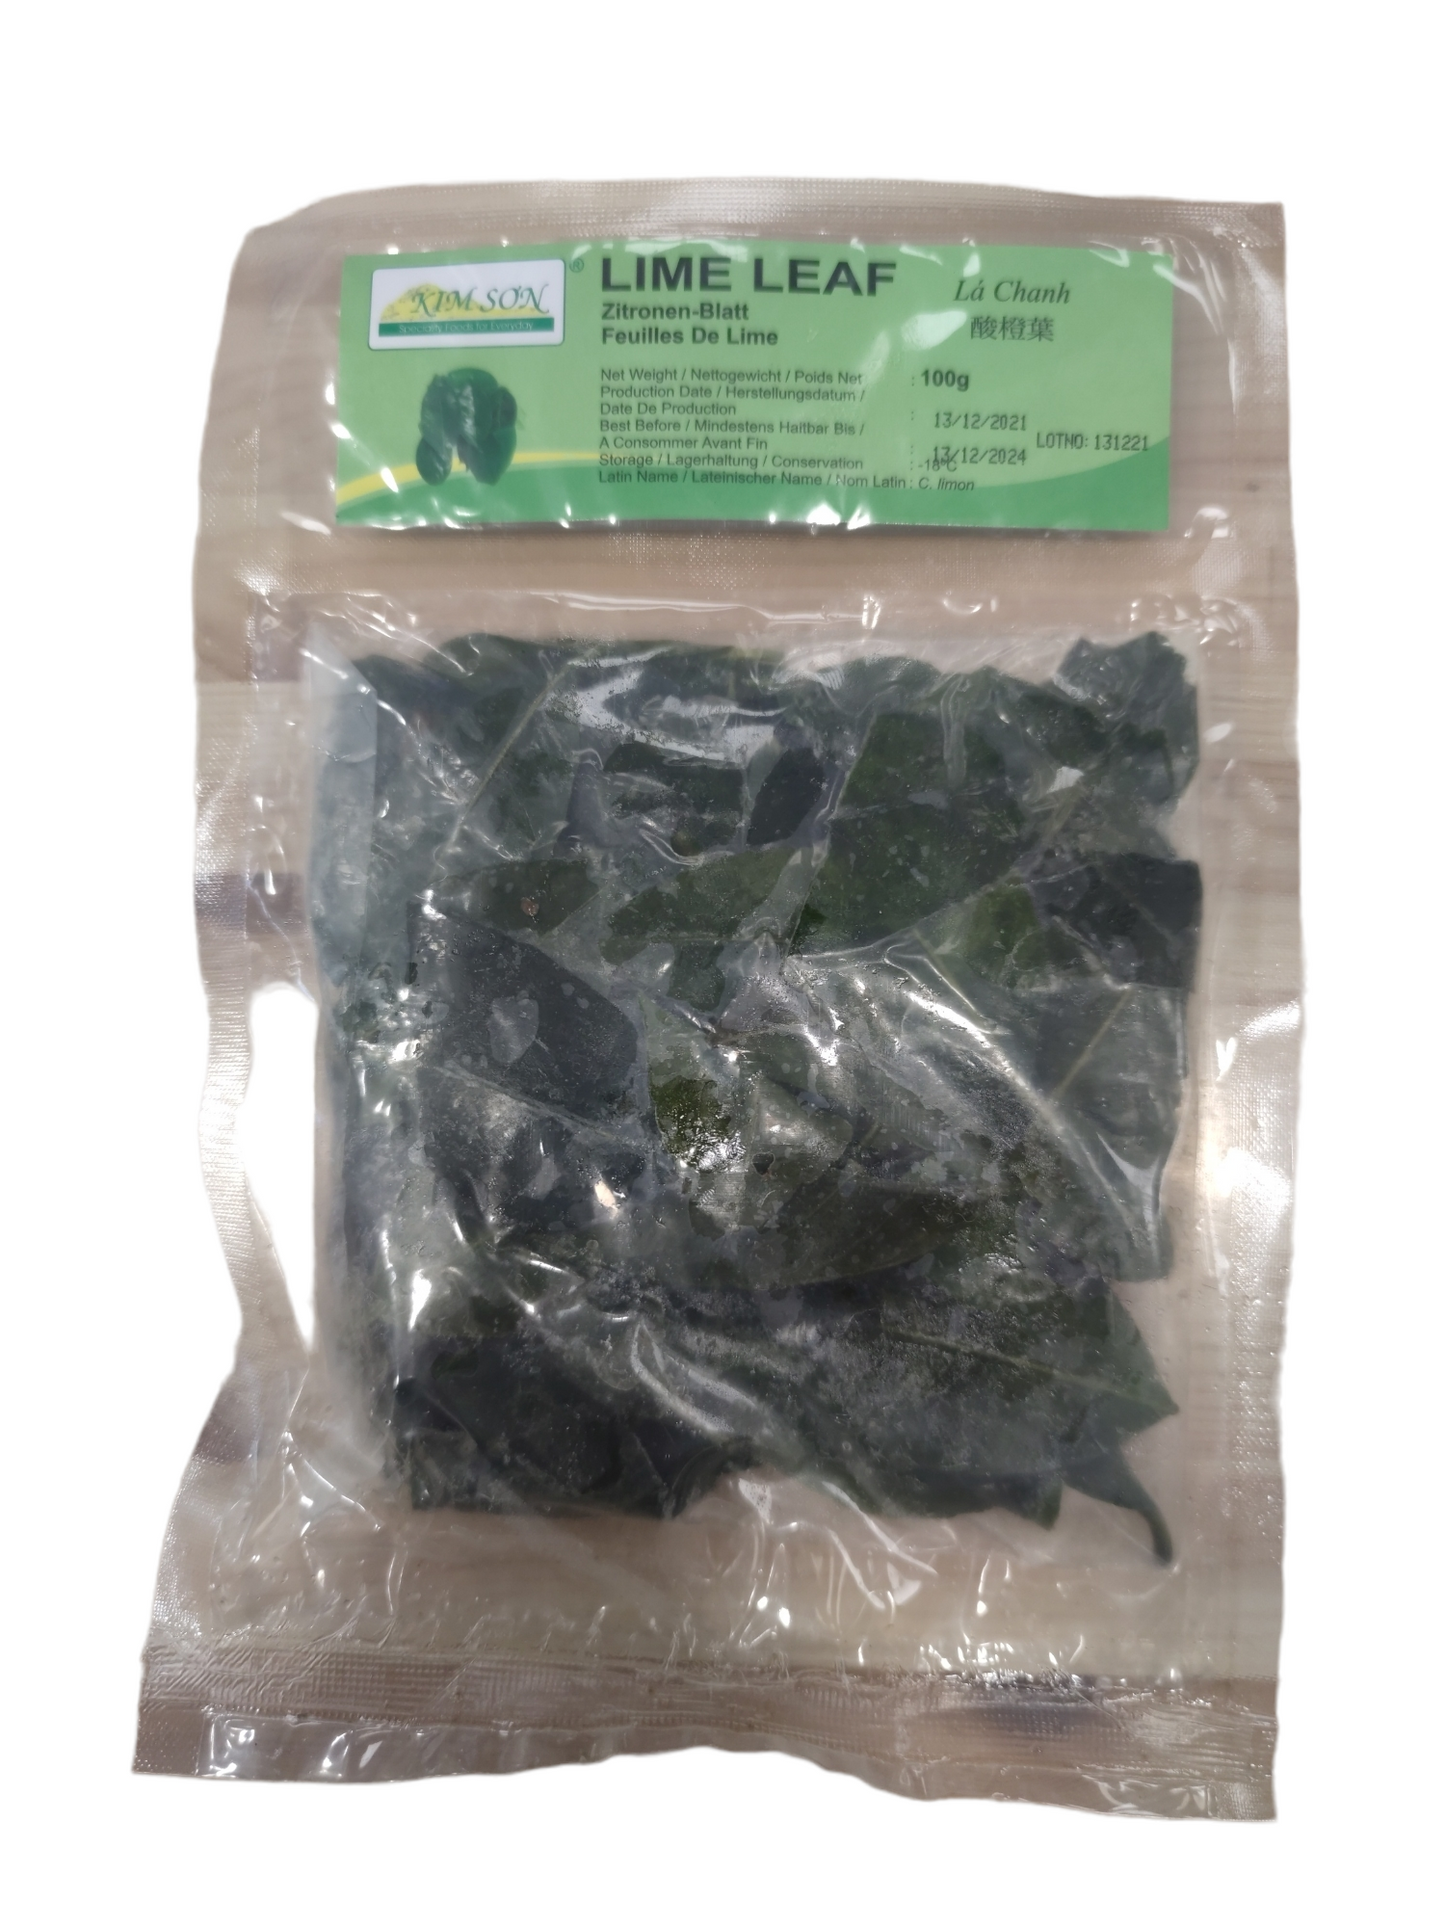 KIM SON Frozen Lime Leaves 100g 檸檬葉